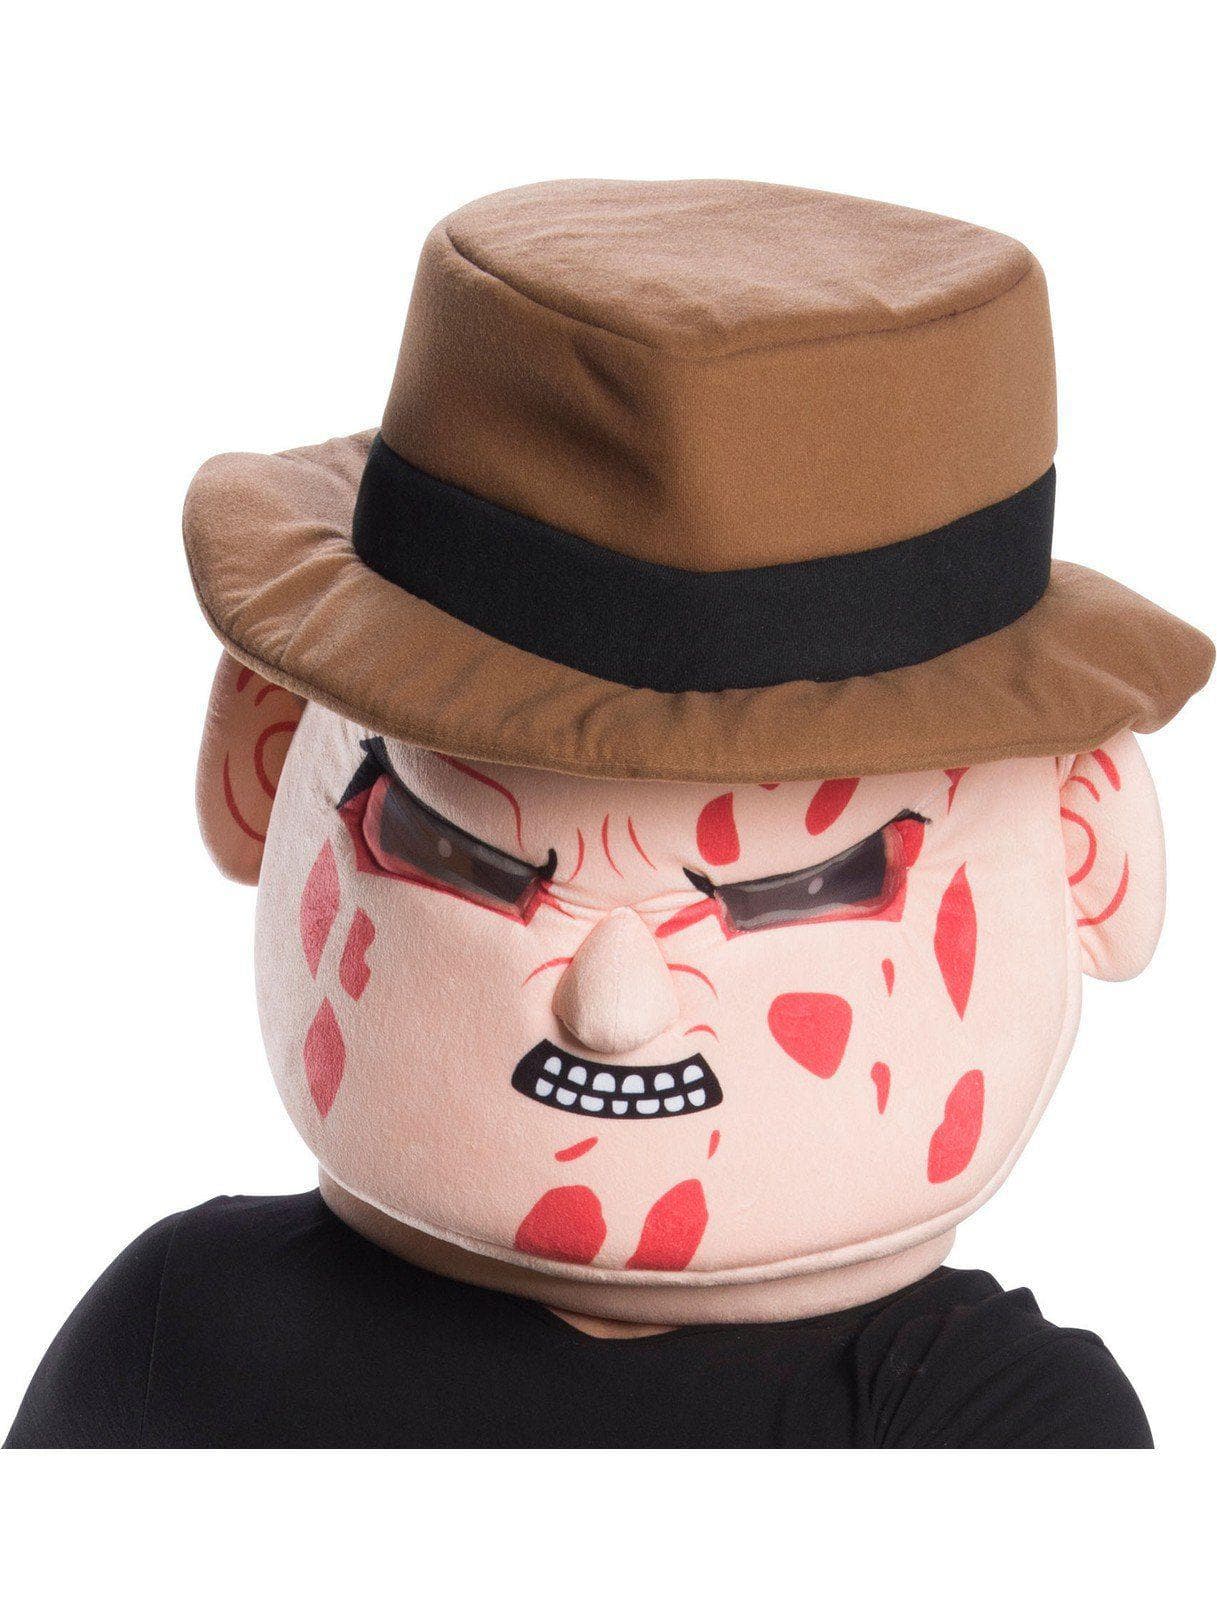 Adult A Nightmare on Elm Street Freddy Krueger Mascot Mask - costumes.com